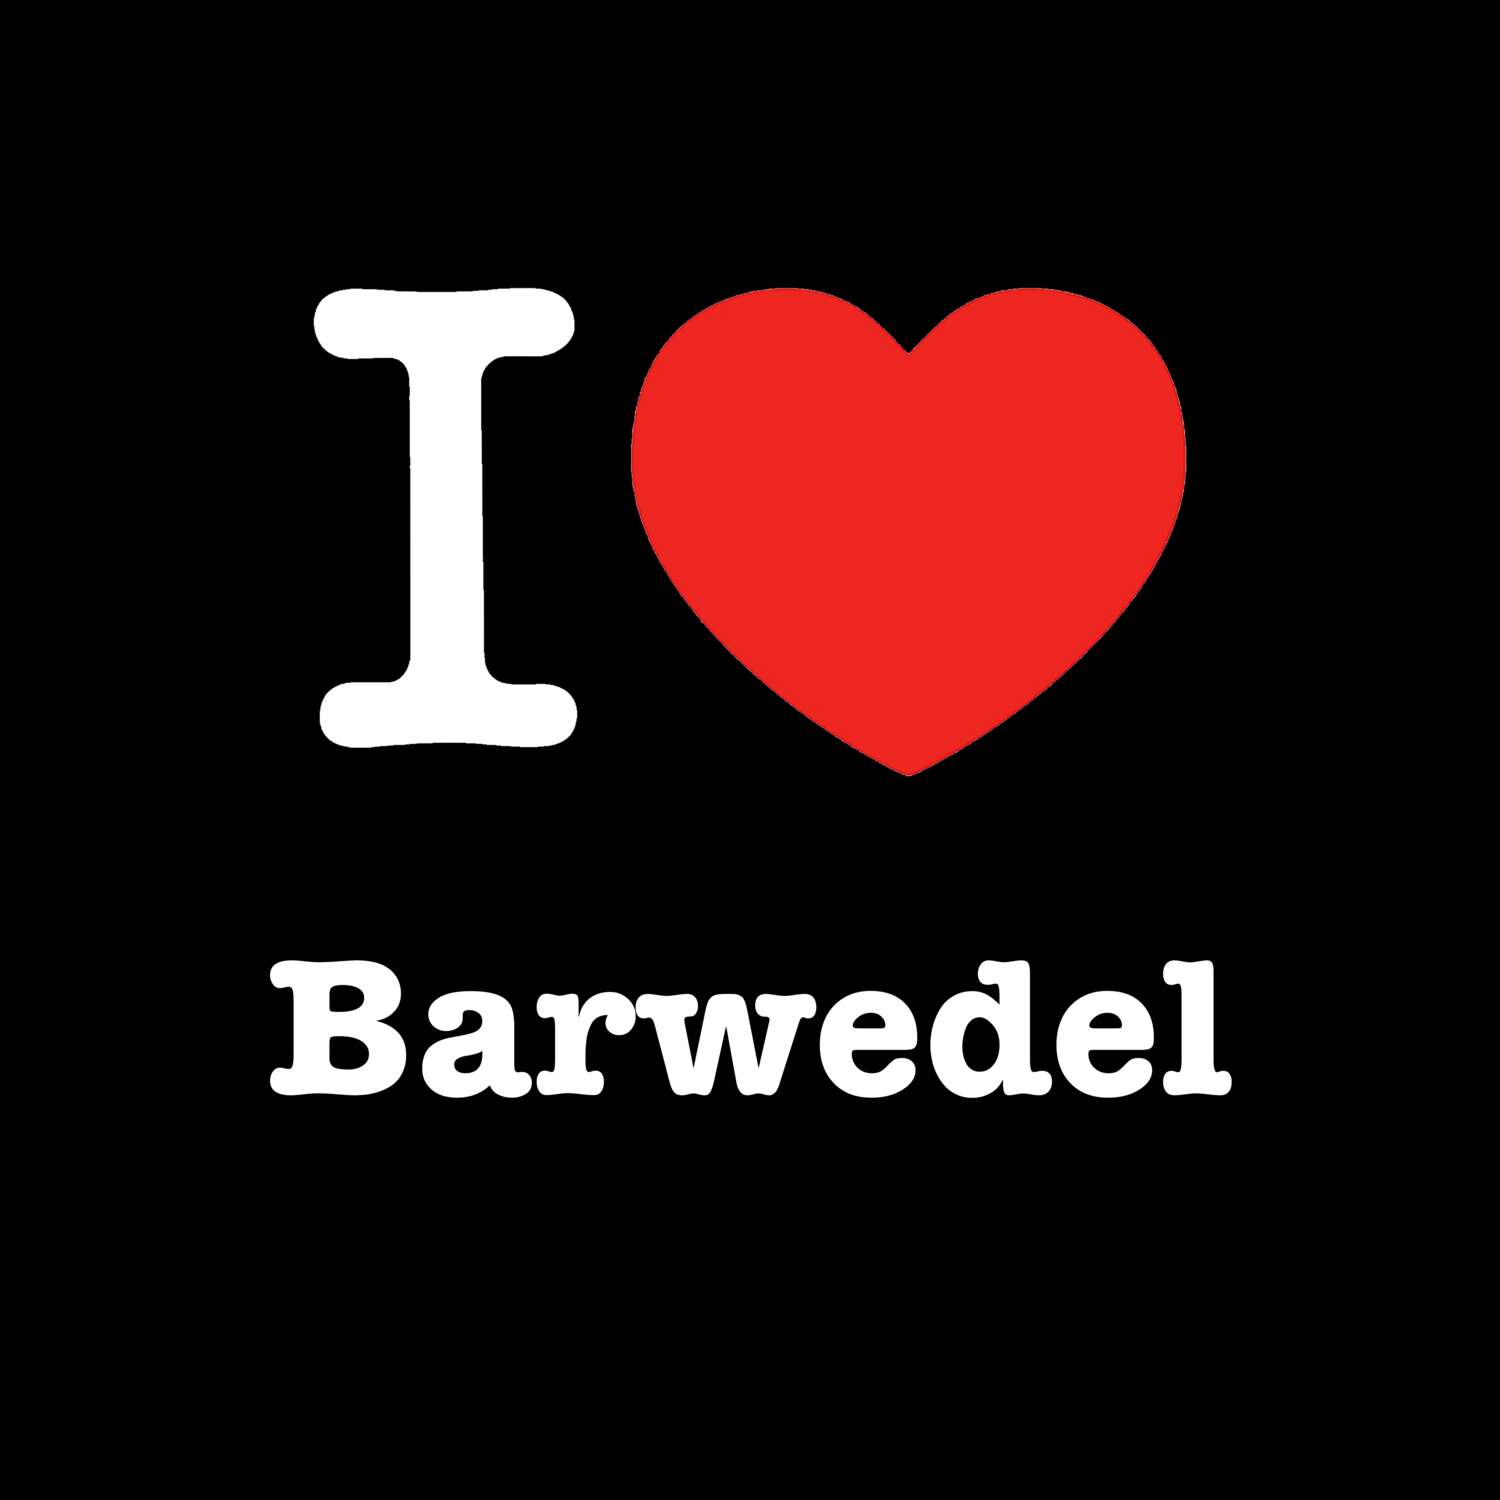 Barwedel T-Shirt »I love«